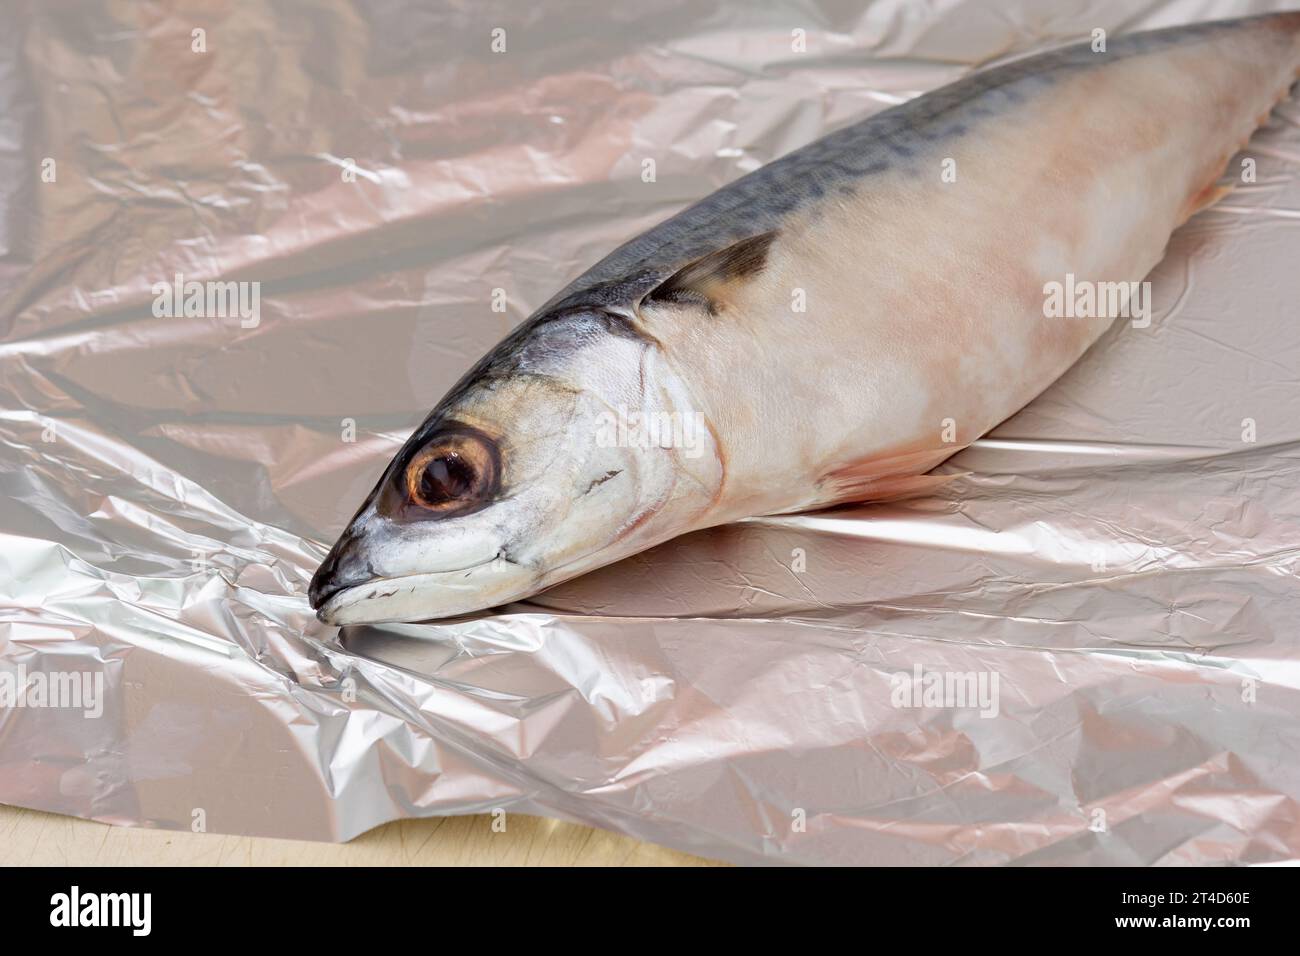 Whole raw mackerel fish on tinfoil Stock Photo